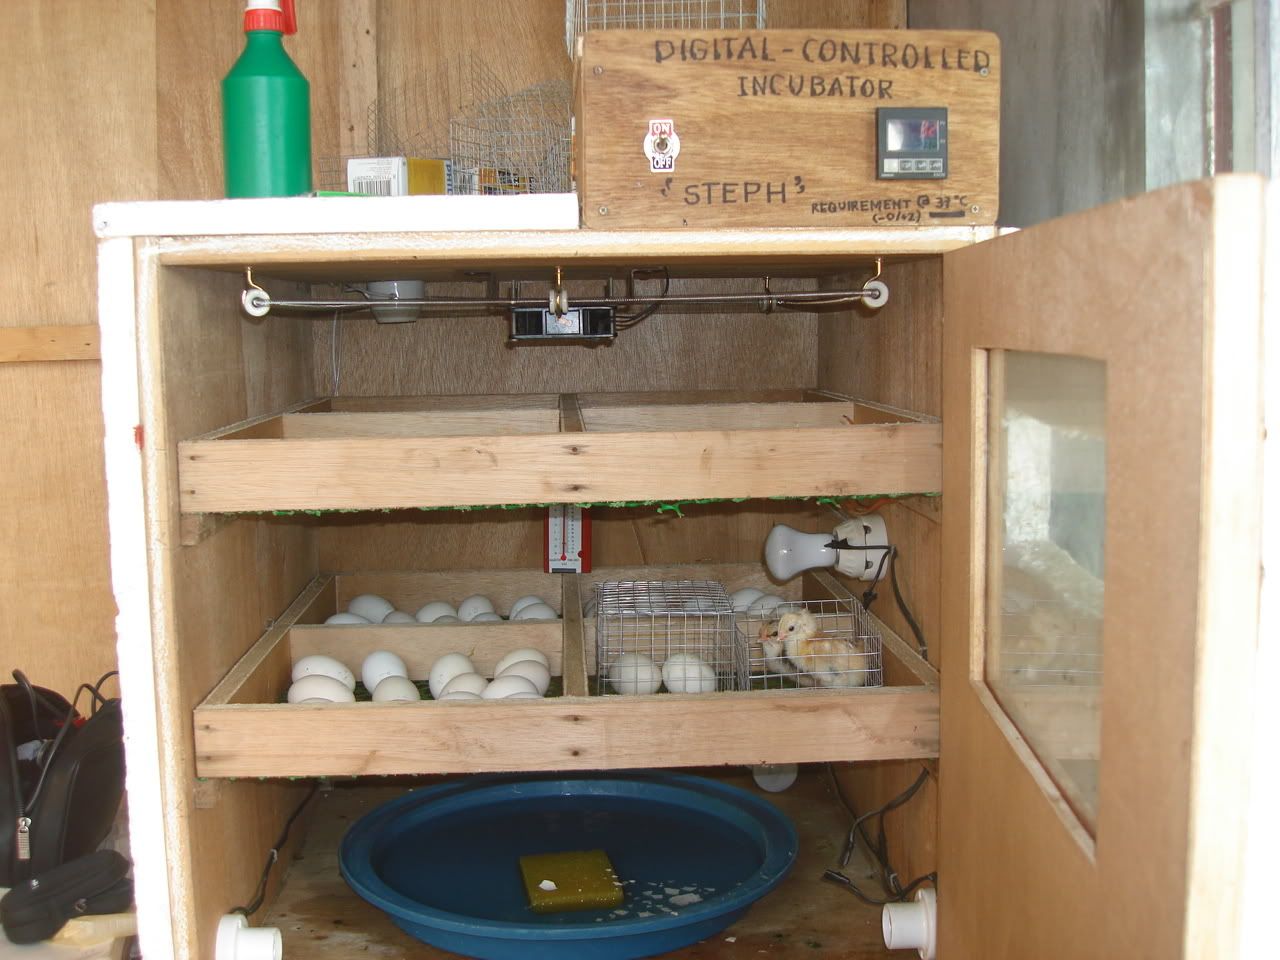  incubator to hatch chicks. . The Brinsea Mini Eco incubator is